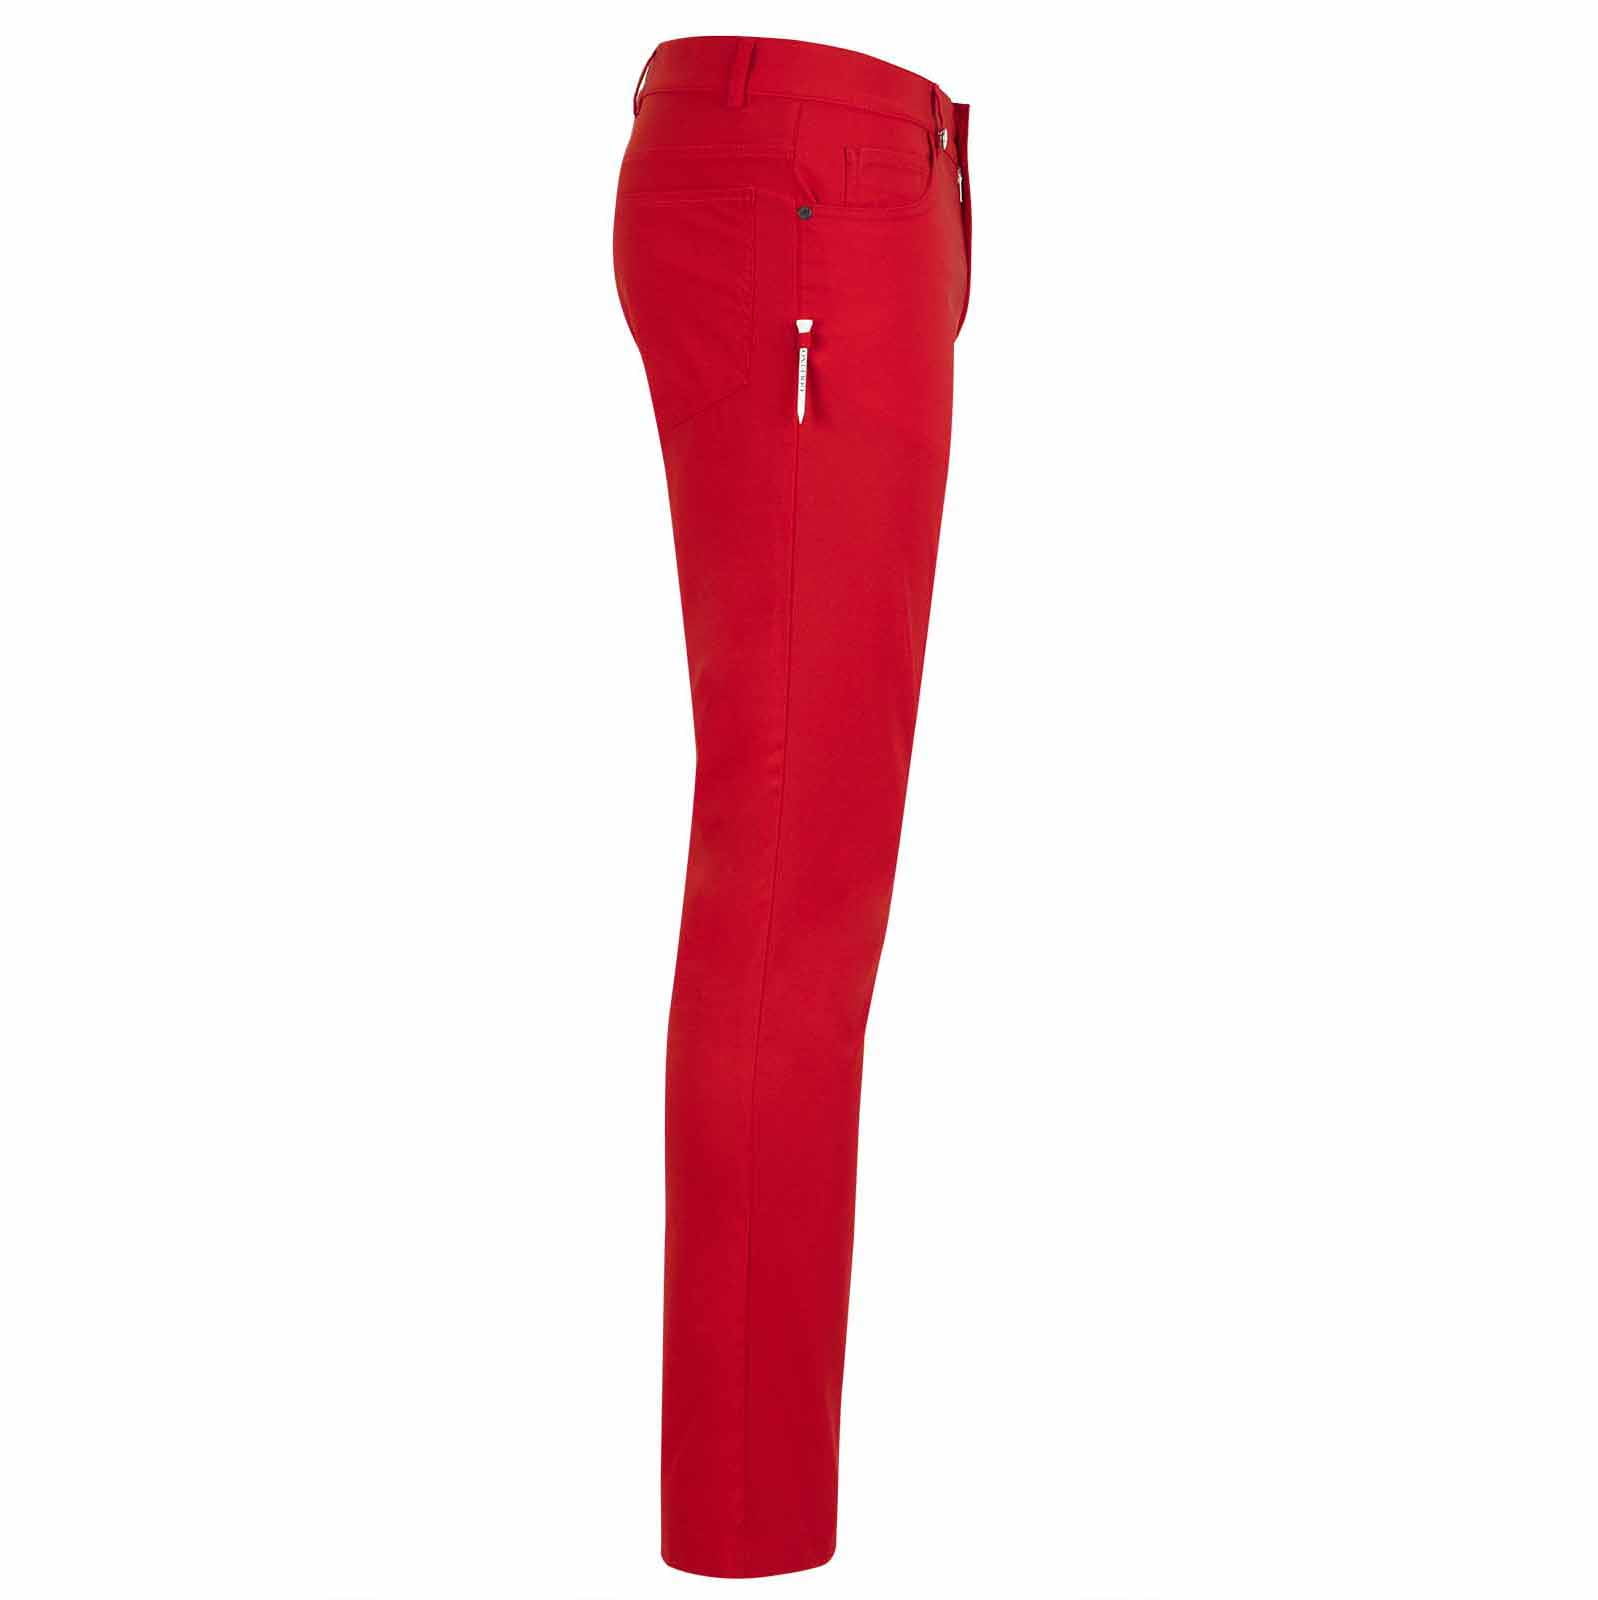 Red Golf Pants for Men  Bonobos  Golf pants Golf pants women Red pants  men